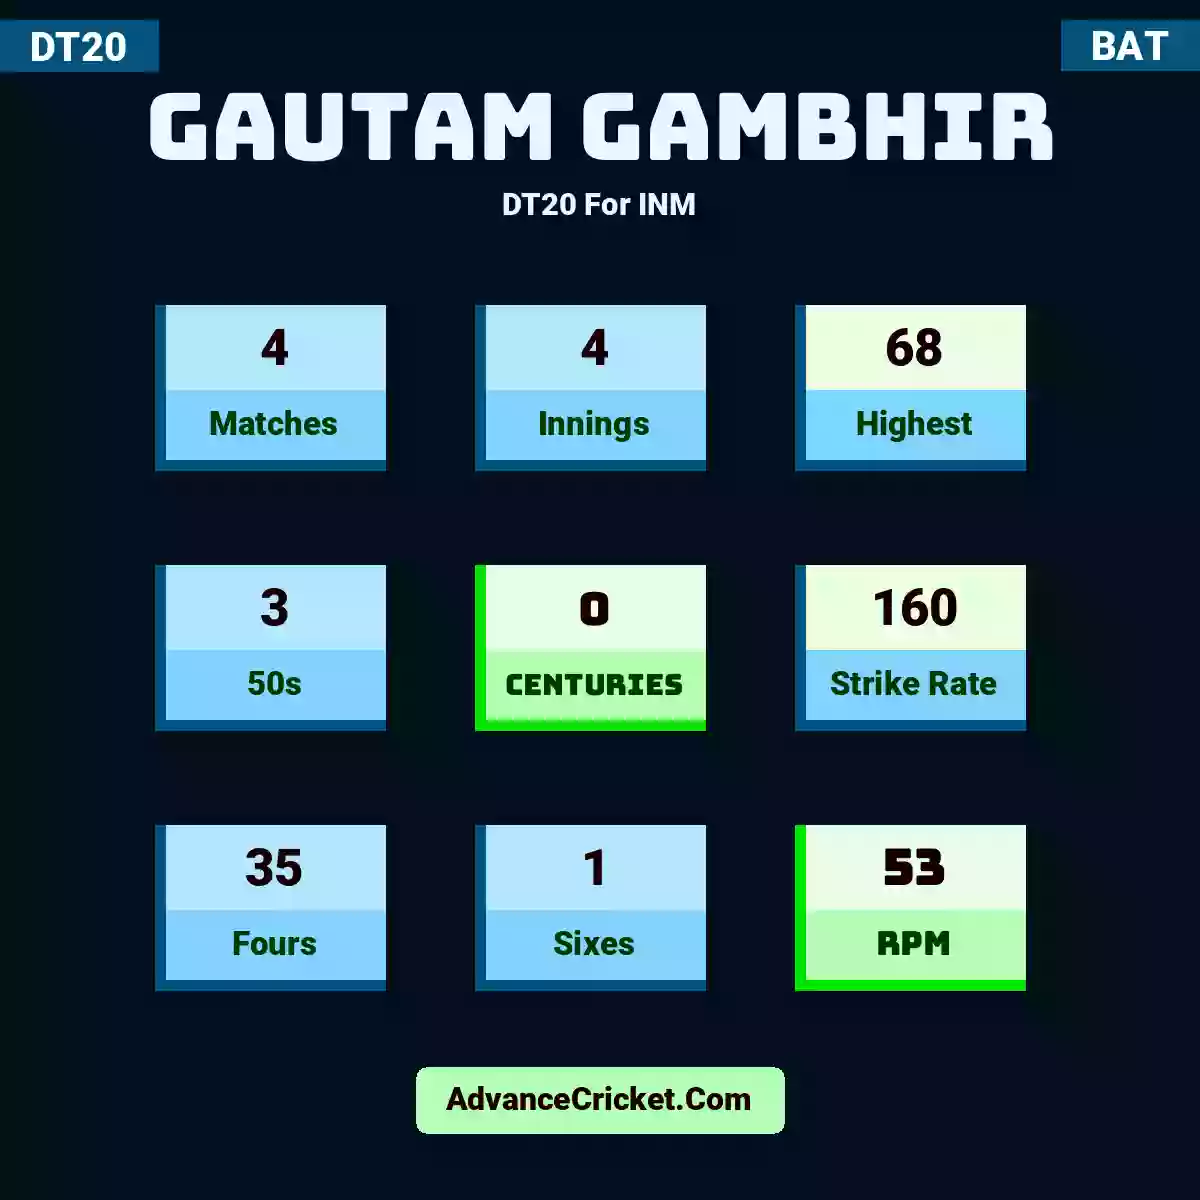 Gautam Gambhir DT20  For INM, Gautam Gambhir played 4 matches, scored 68 runs as highest, 3 half-centuries, and 0 centuries, with a strike rate of 160. G.Gambhir hit 35 fours and 1 sixes, with an RPM of 53.